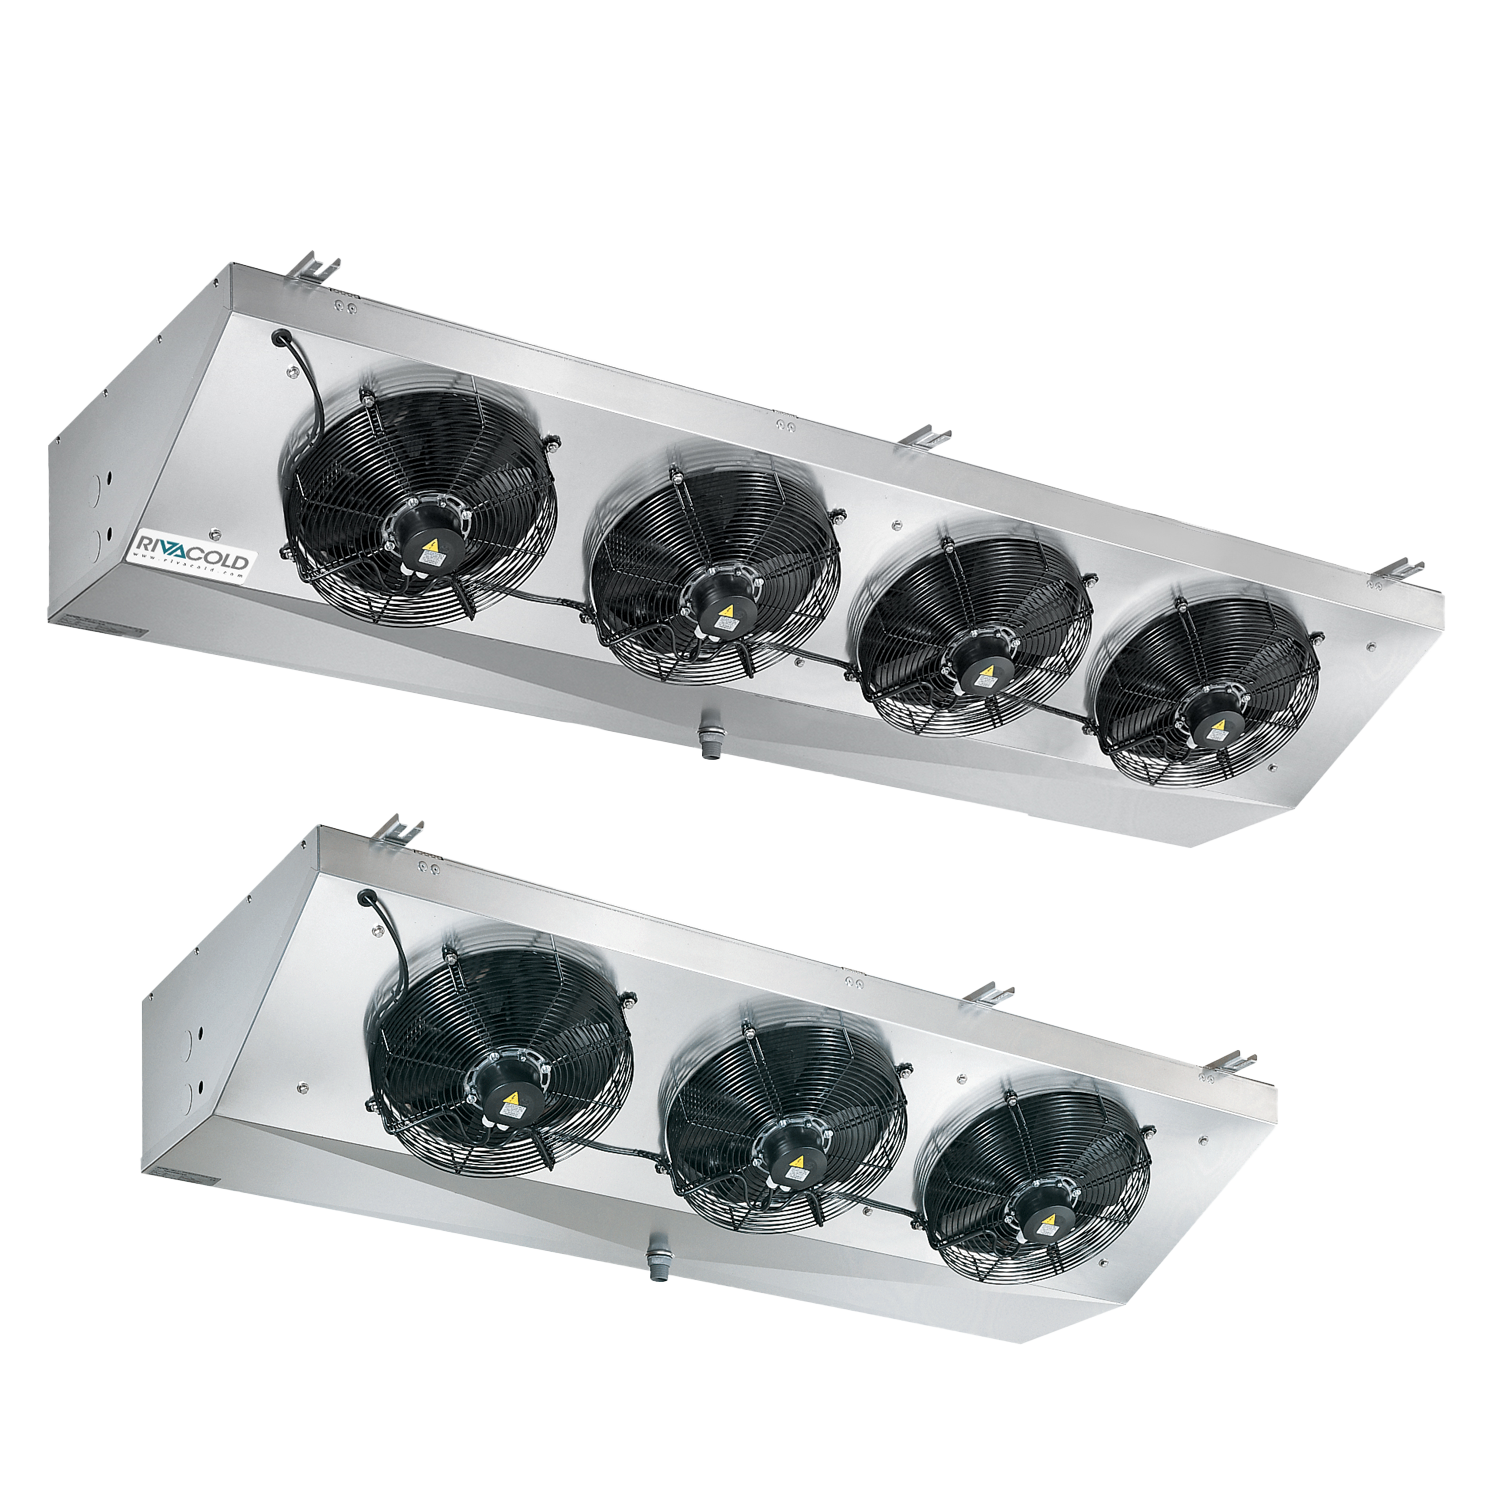 RSIX-350: Flat ceiling evaporator with EC fans